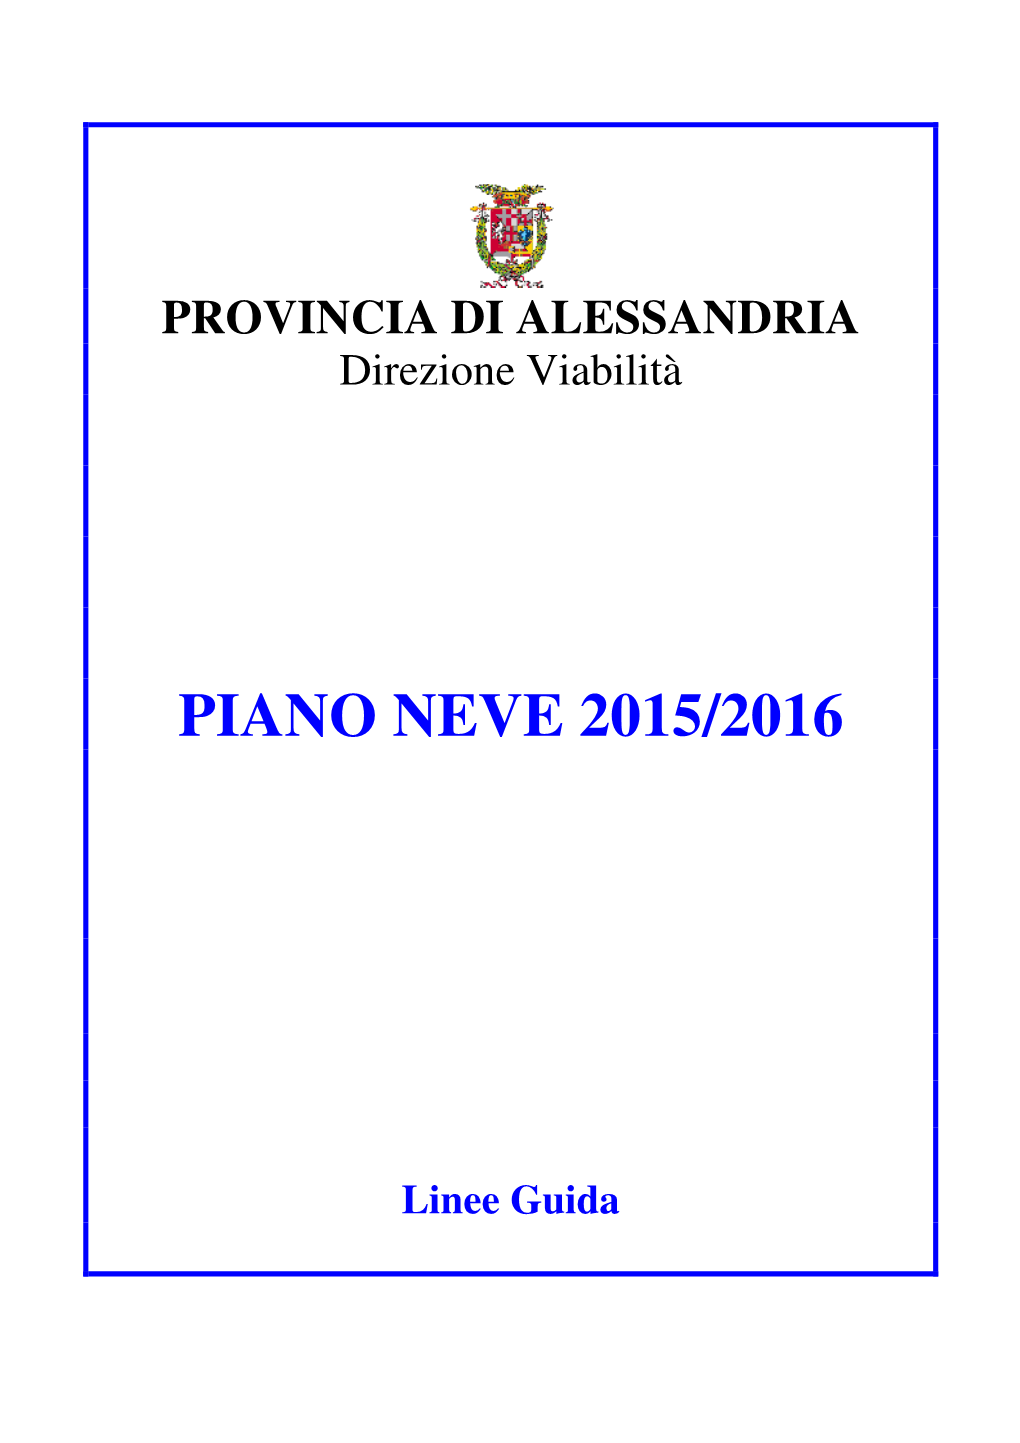 Piano Neve 2015/2016